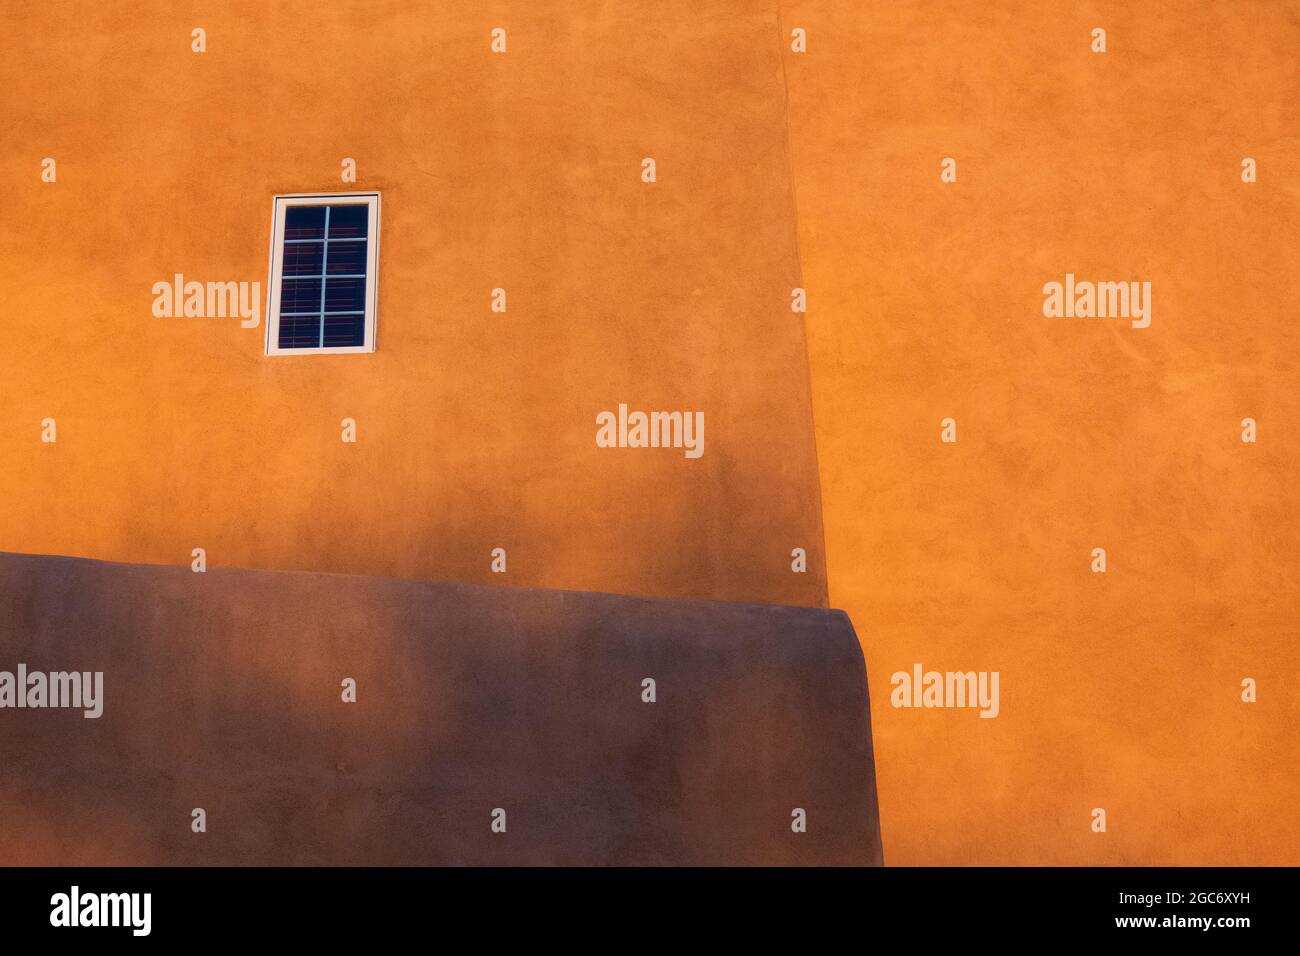 USA, New Mexico, Santa Fe, Gelbe Wände im Adobe-Stil mit Fenster Stockfoto